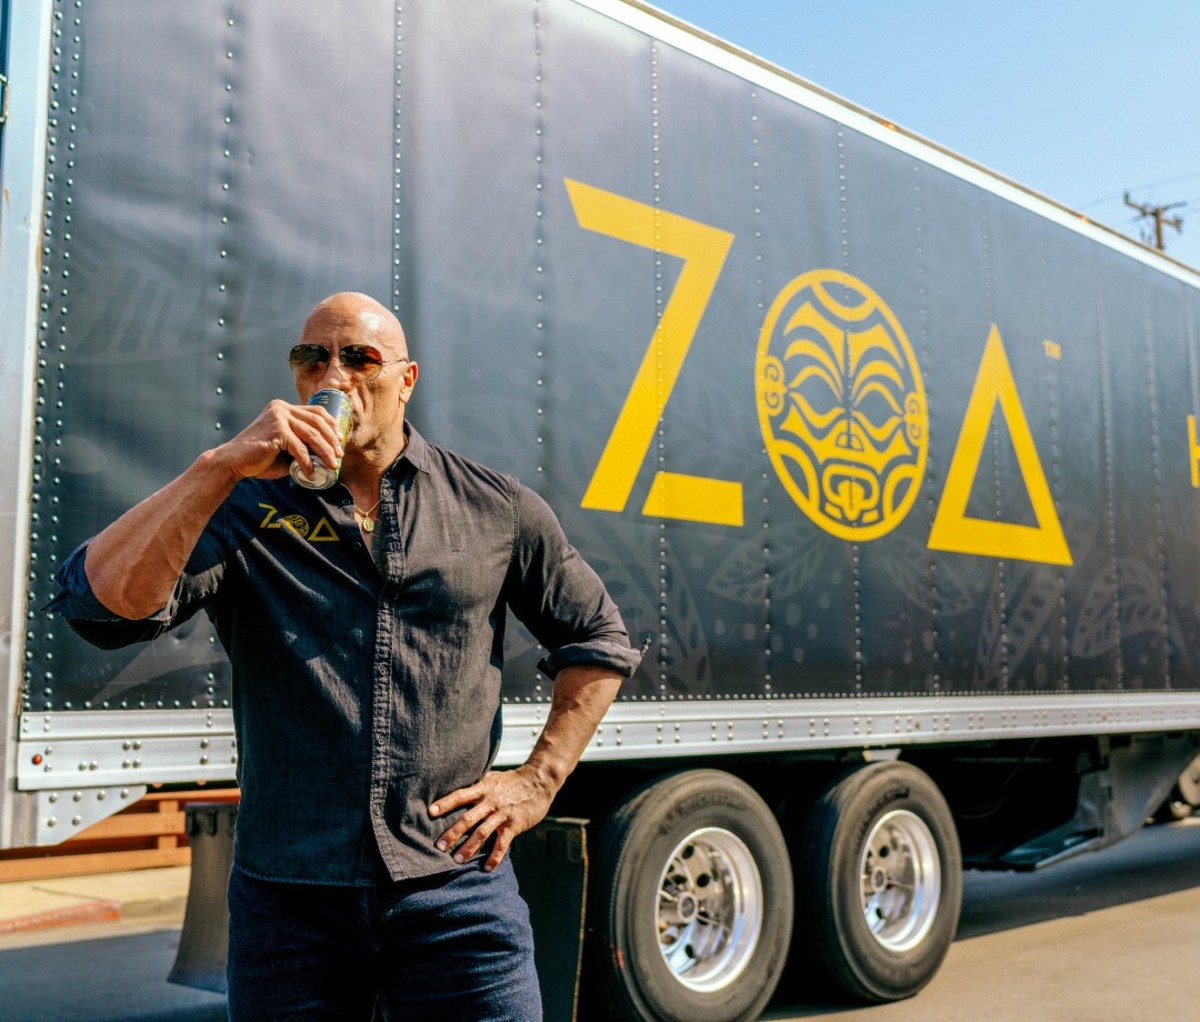 Dwayne Johnson drinking Zoa energy drink in front of branded truck